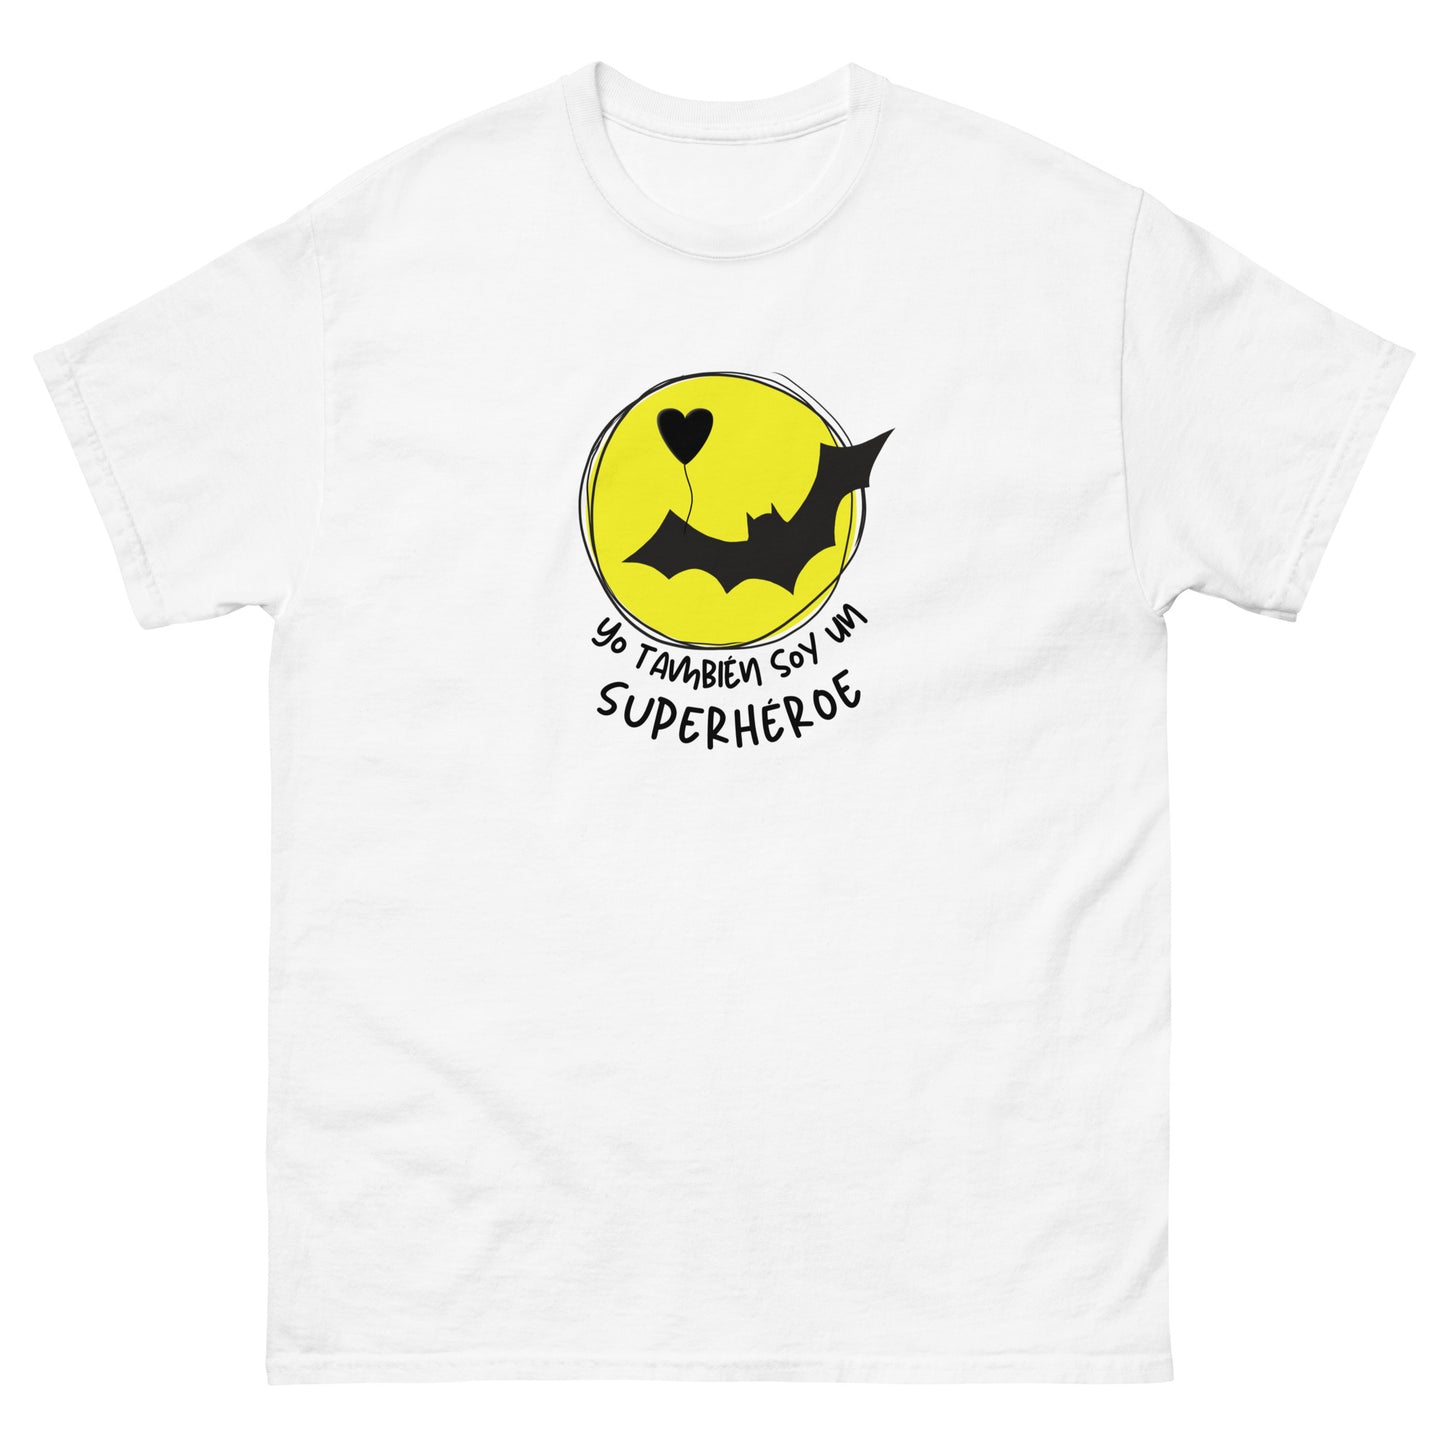 Camiseta blanca para hombre con muerciélago volando con globo